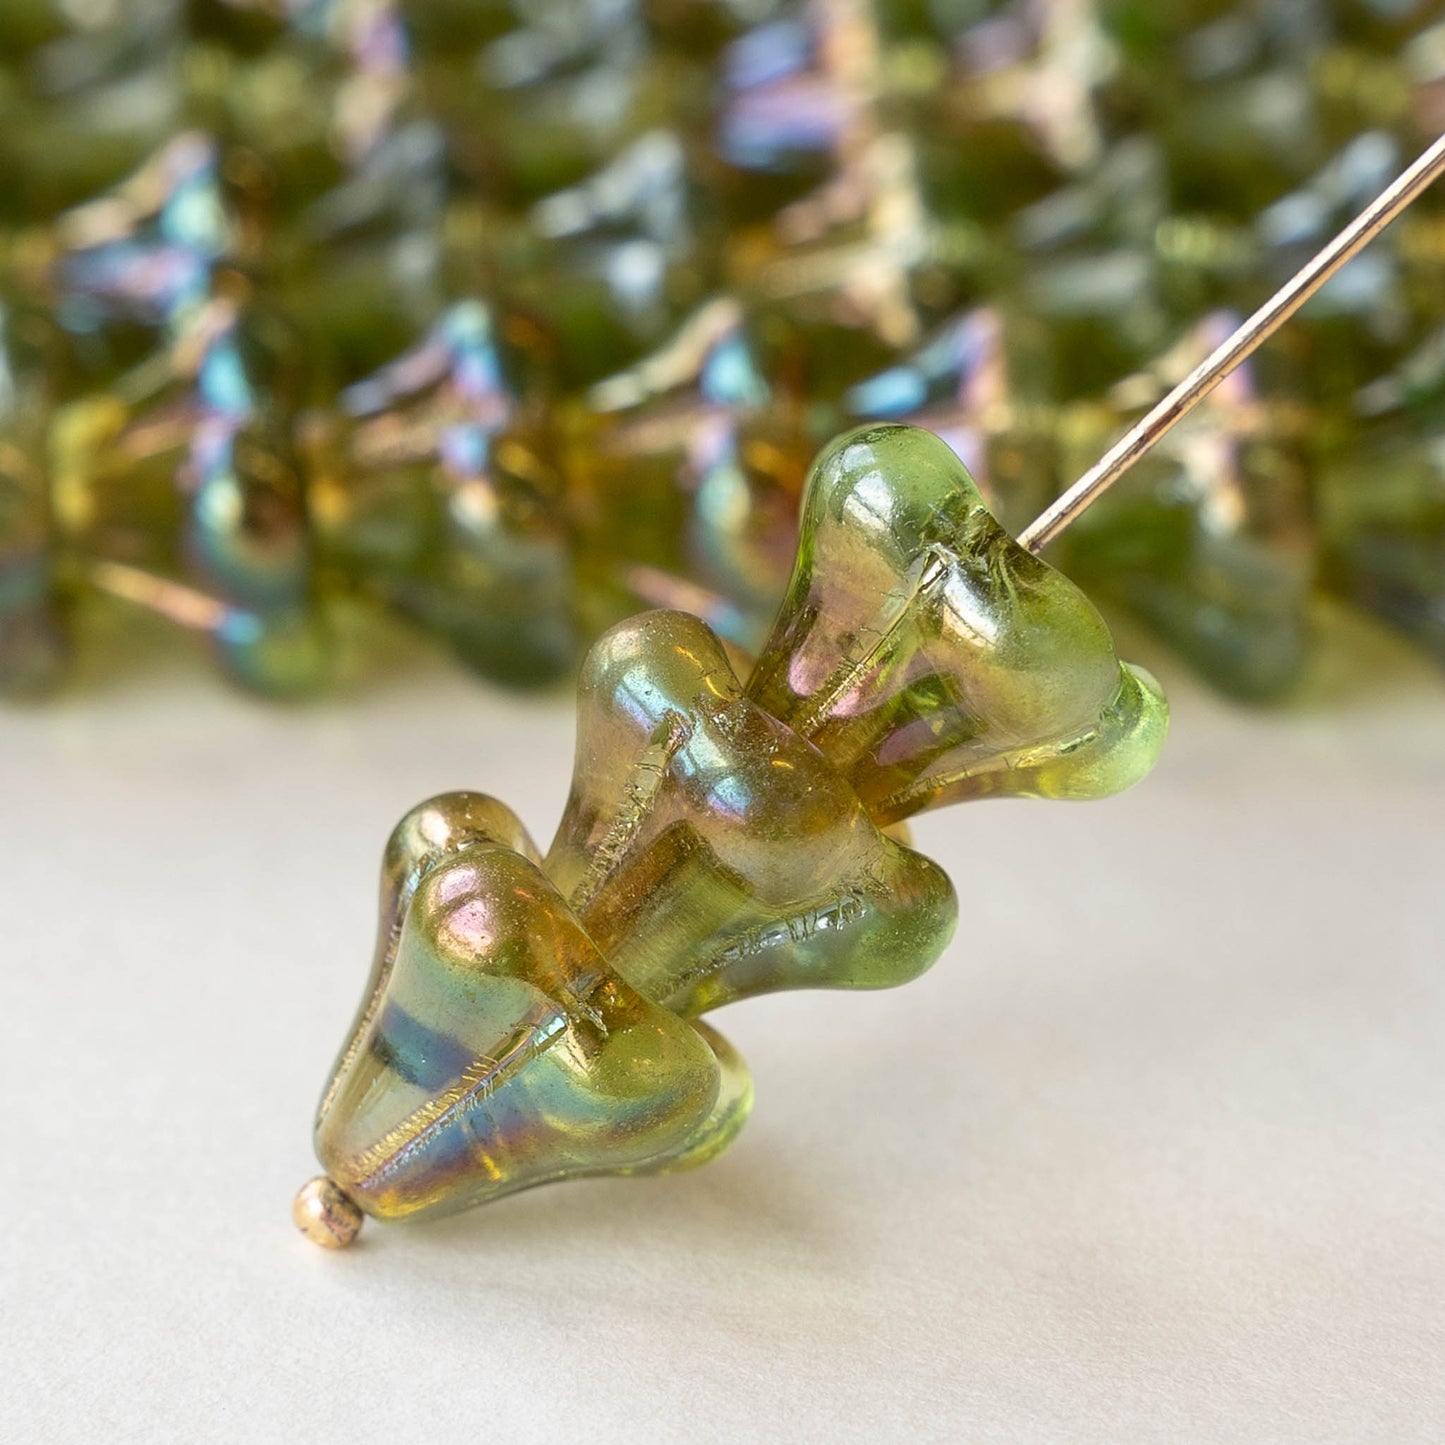 10x12mm Trumpet Flower Beads - Peridot Green Celsian - 10 beads